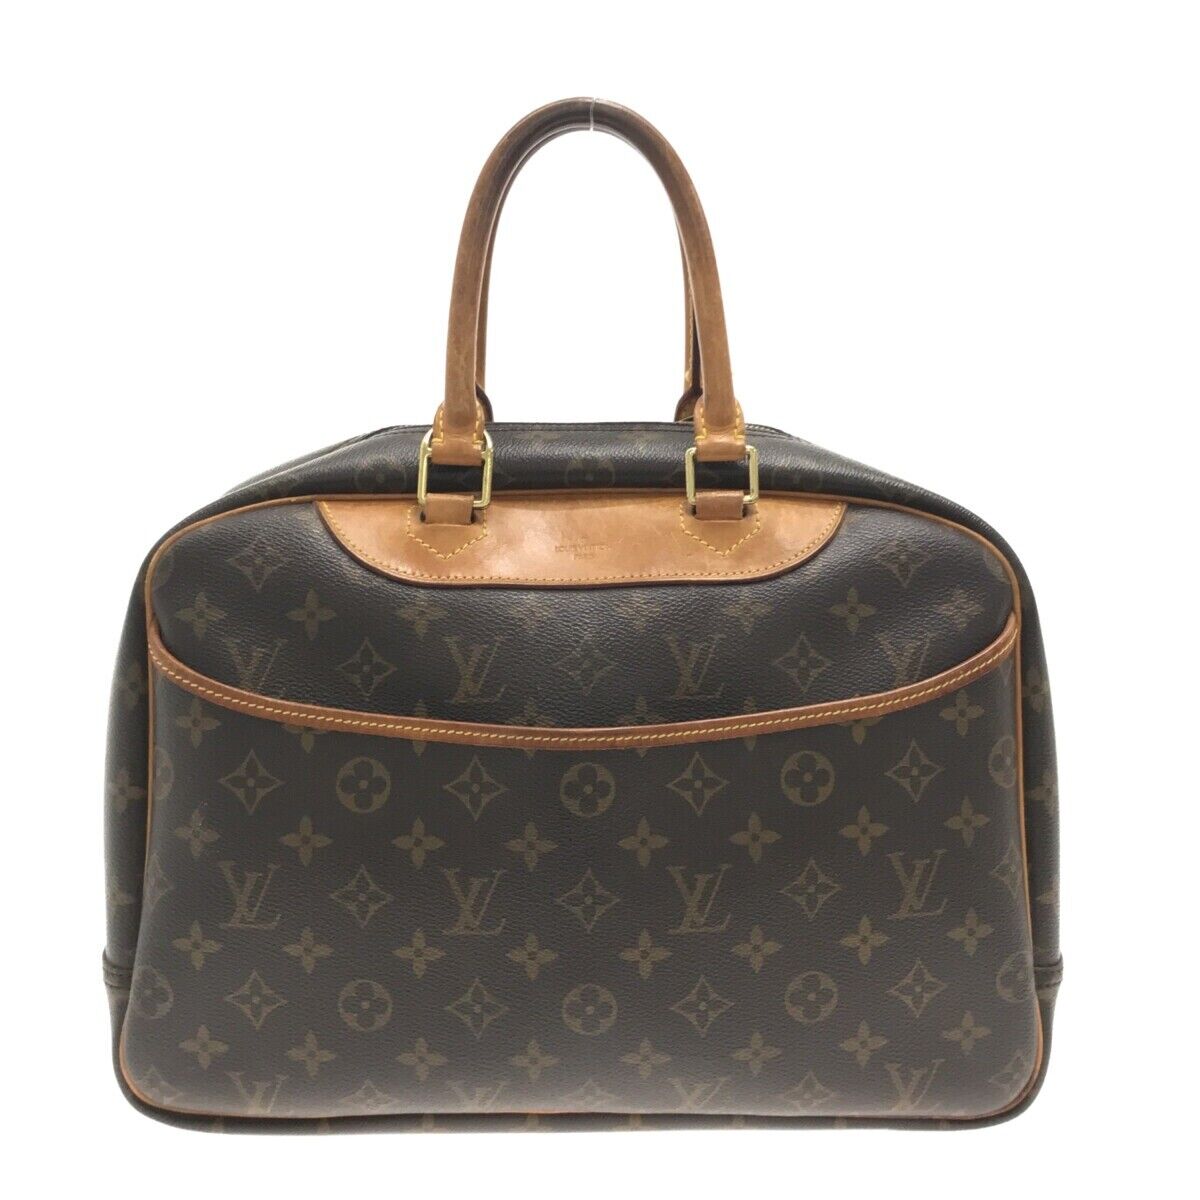 Vintage Louis Vuitton Handbag Deauville M47270 Monogram Brown